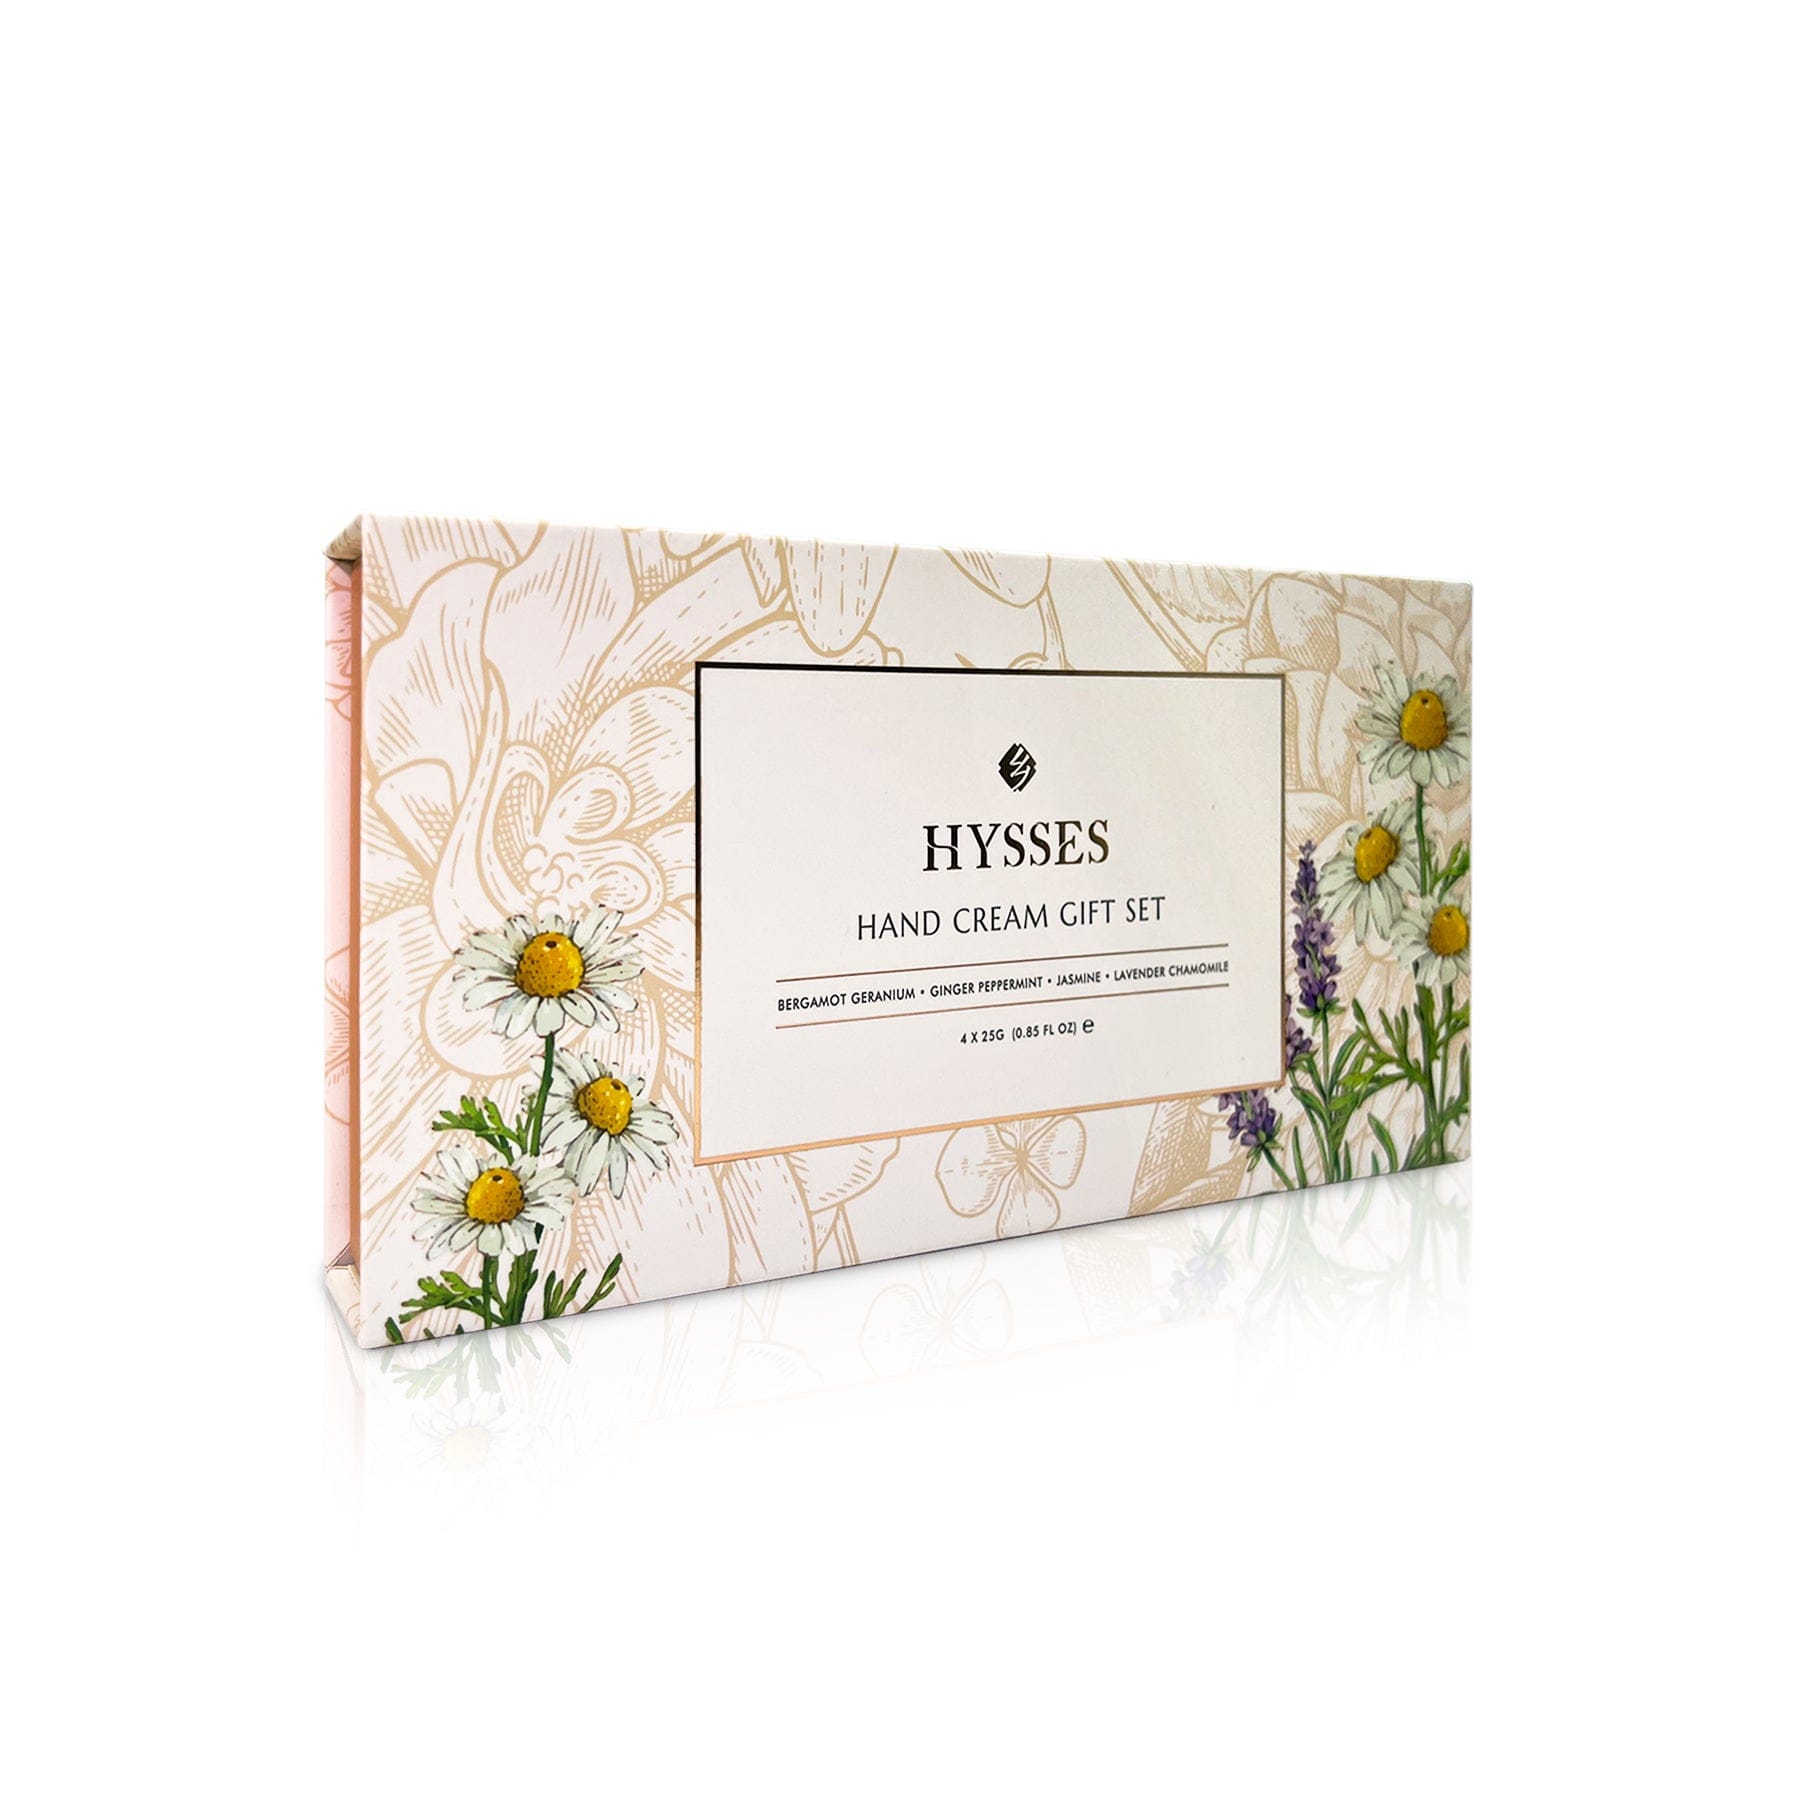 Hysses Body Care Travel Hand Cream Gift Set of 4